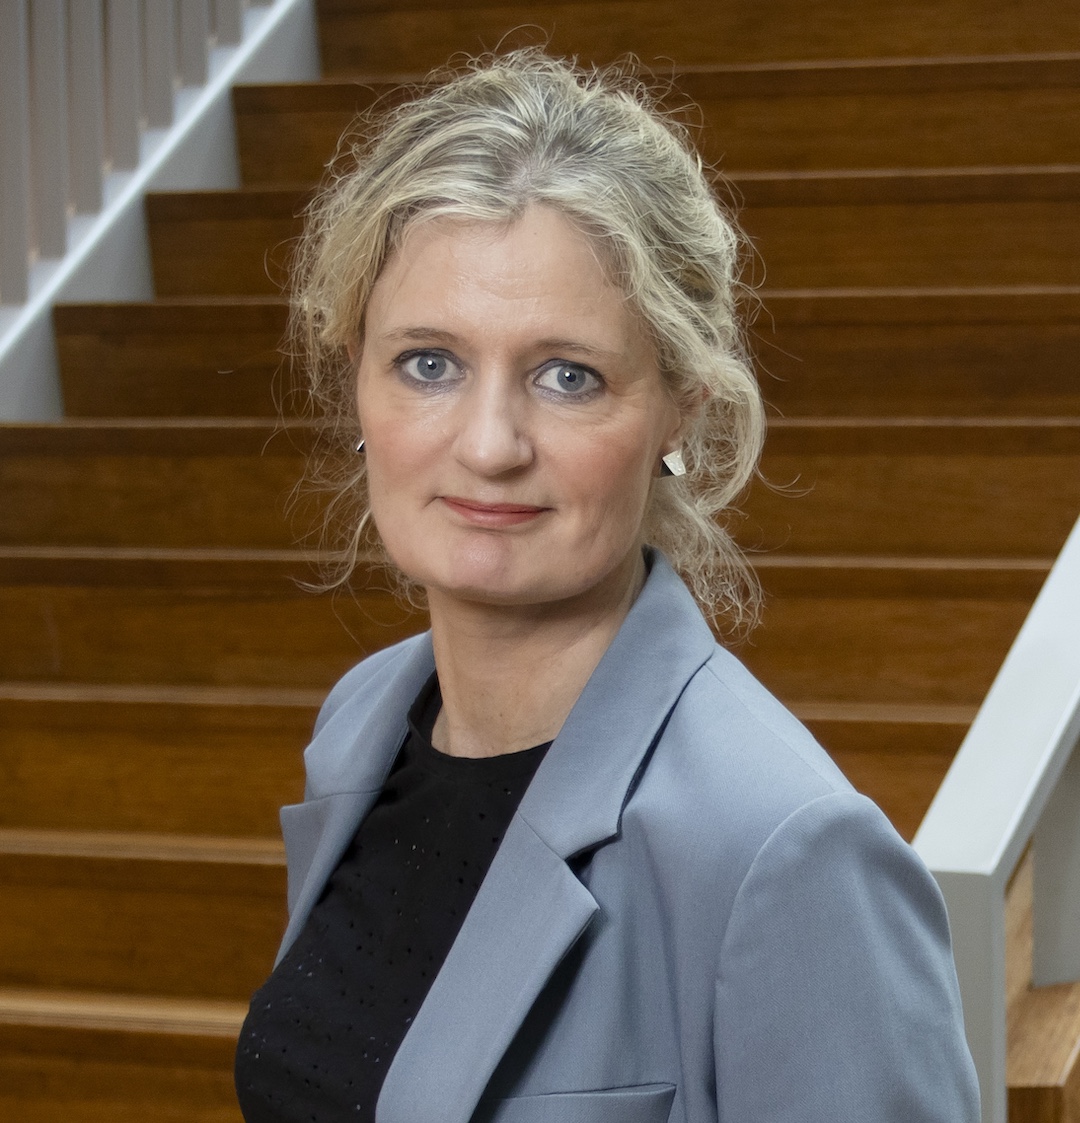 prof. dr. Marit Sijbrandij